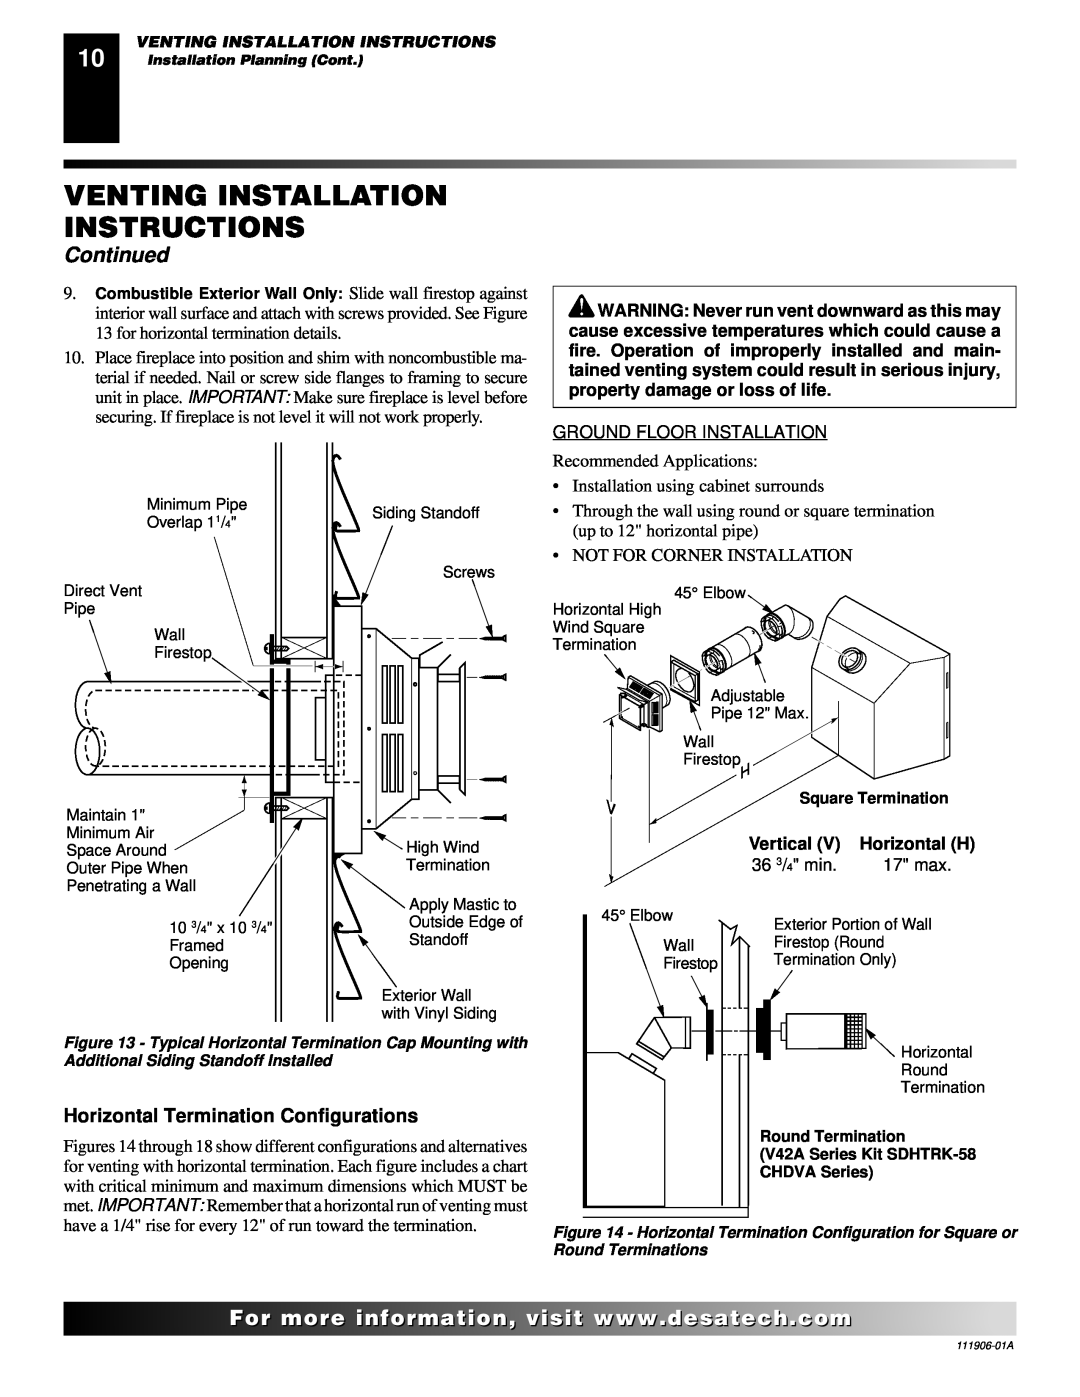 Desa (V)V42NA(1) Venting Installation Instructions, Continued, Square Termination, Vertical, CHDVA Series 